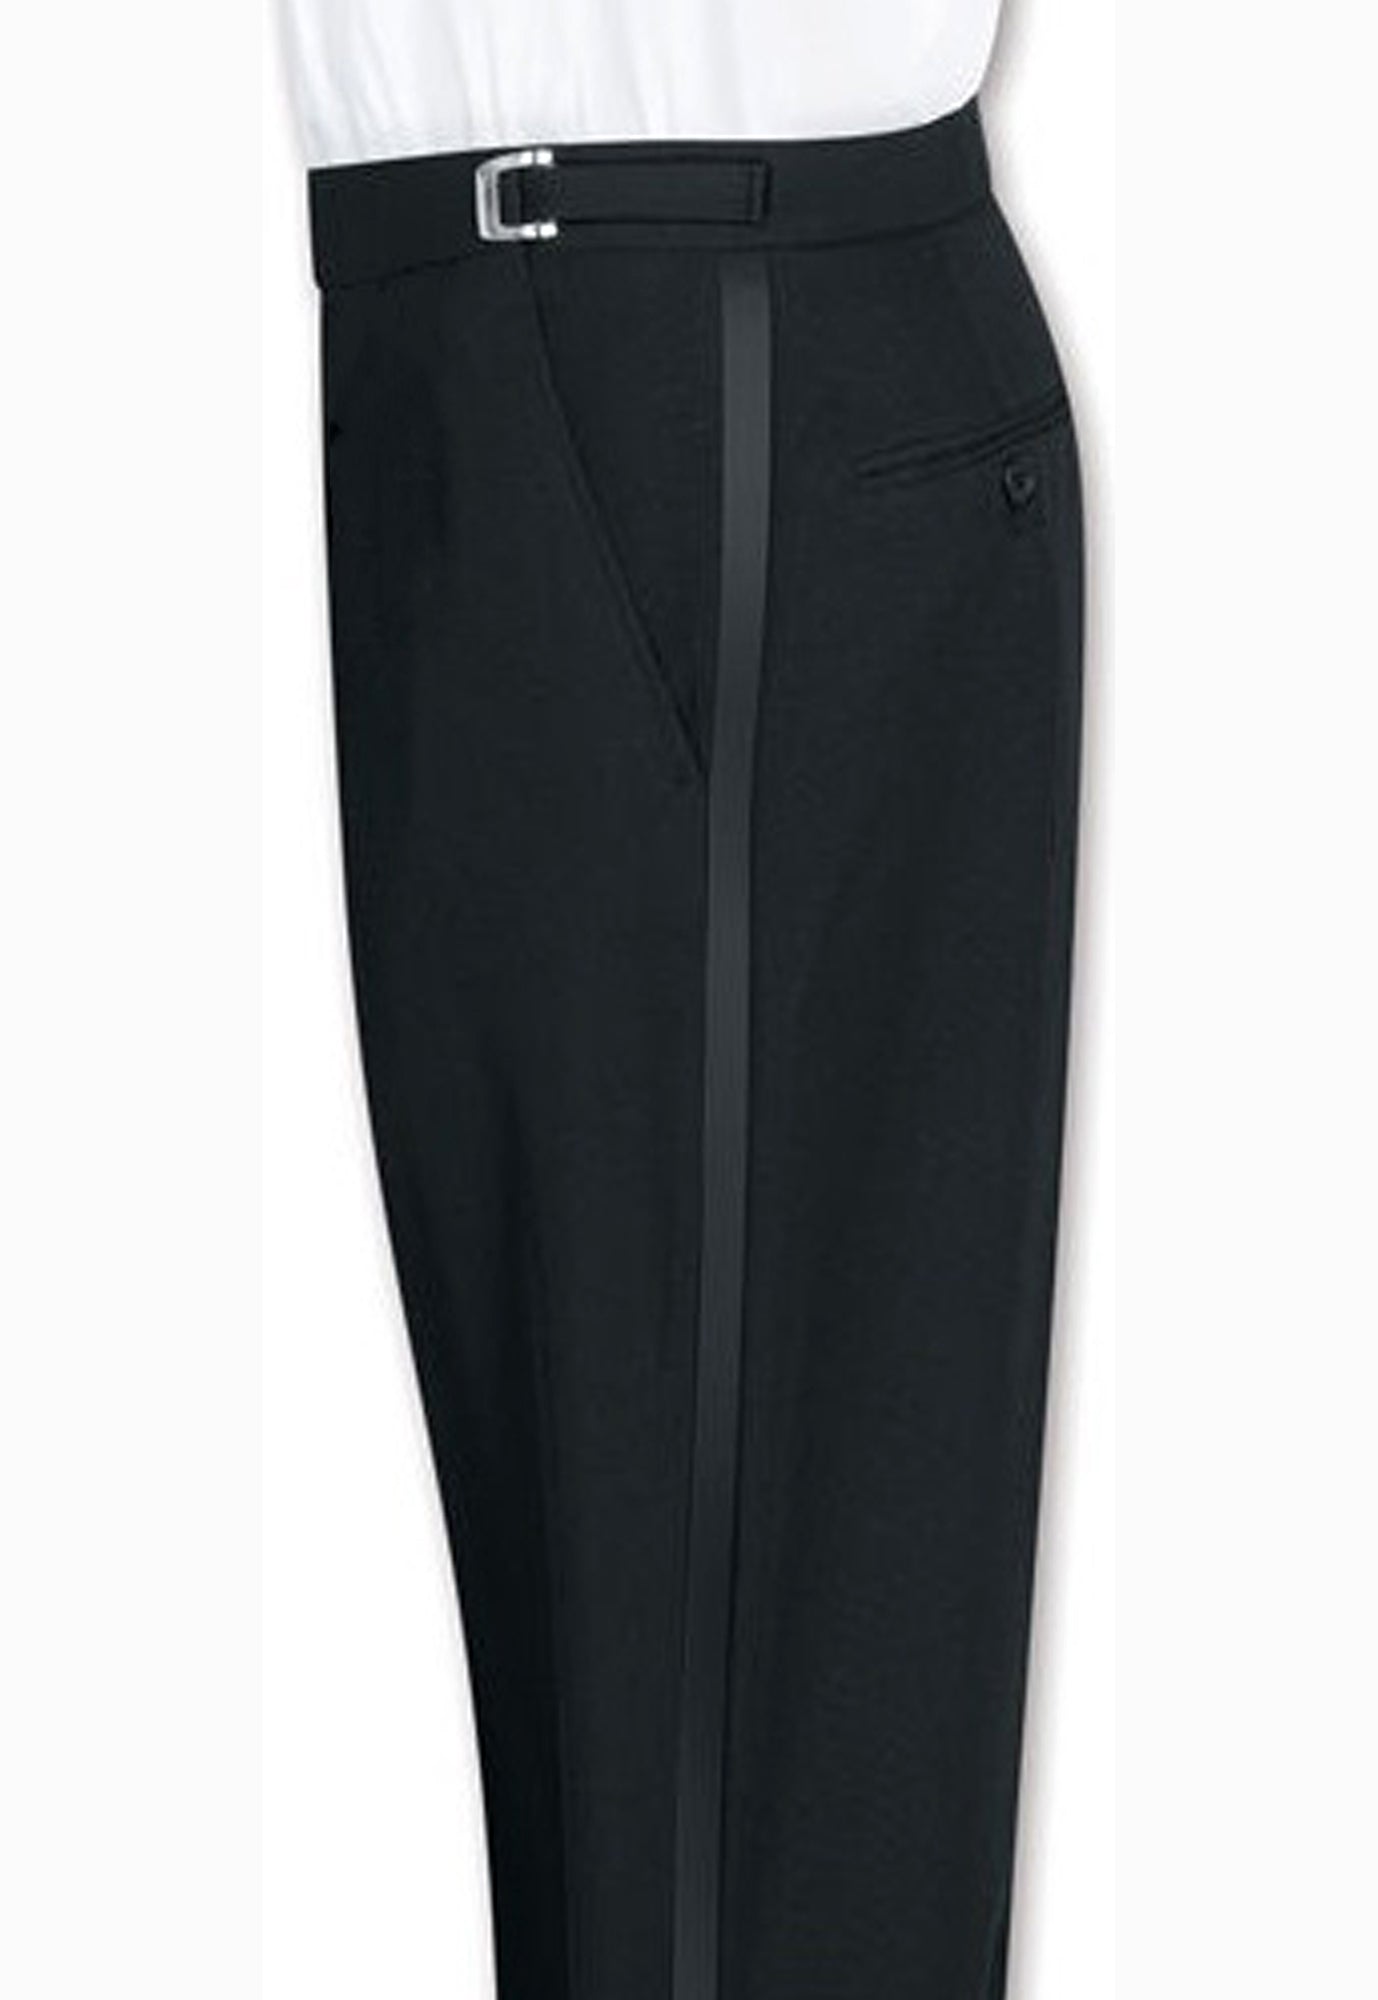 Men's Black, Adjustable-Waist, Pleated Front Tuxedo Pants with